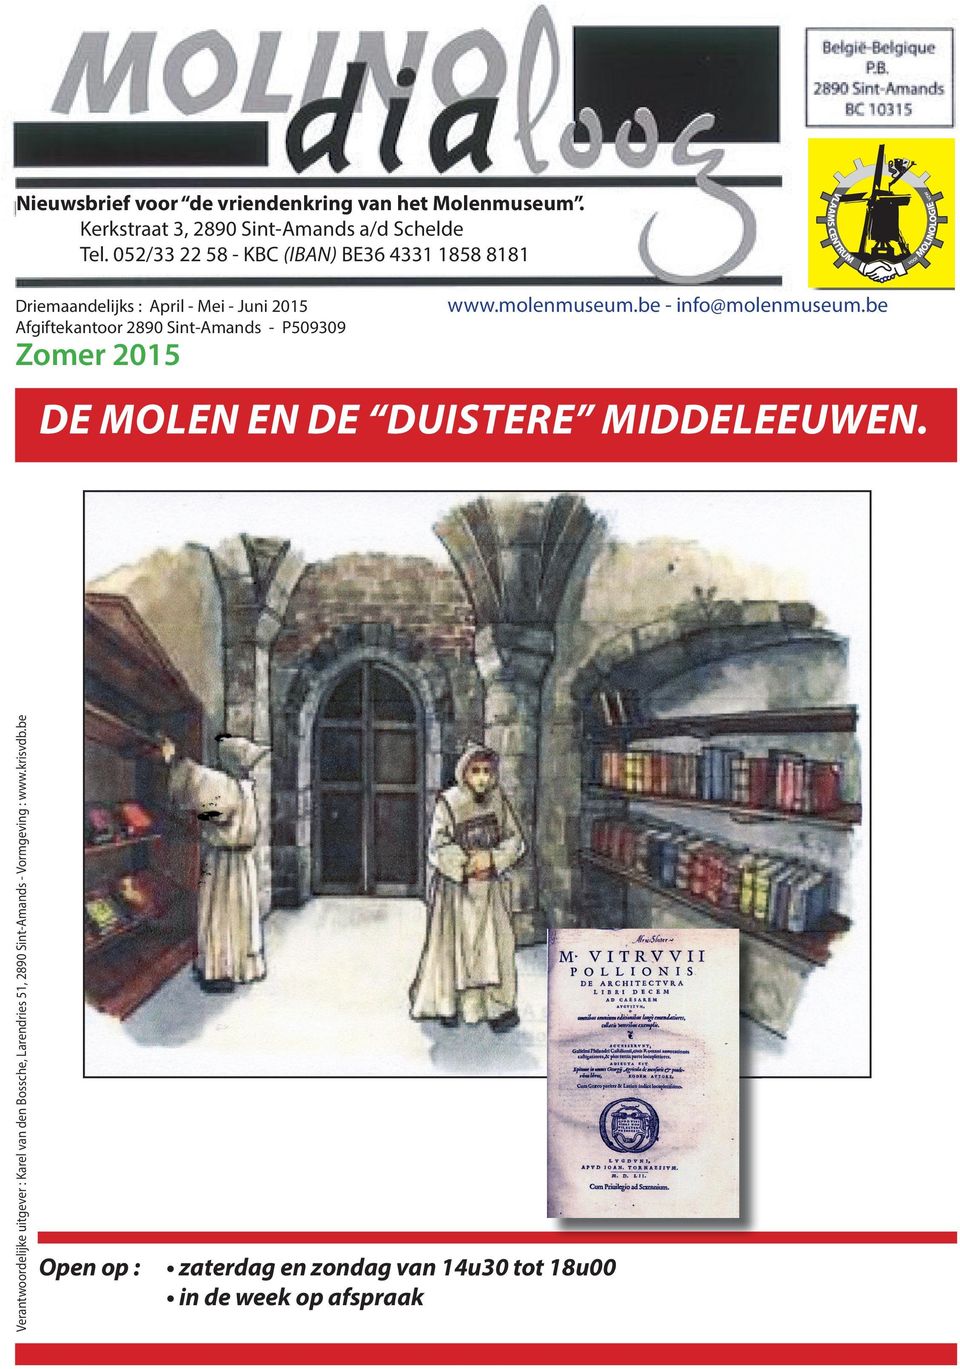 Vriende www.molenmuseum.be - info@molenmuseum.be Zomer 2015 TENT DE MOLEN EN DE DUISTERE MIDDELEEUWEN.